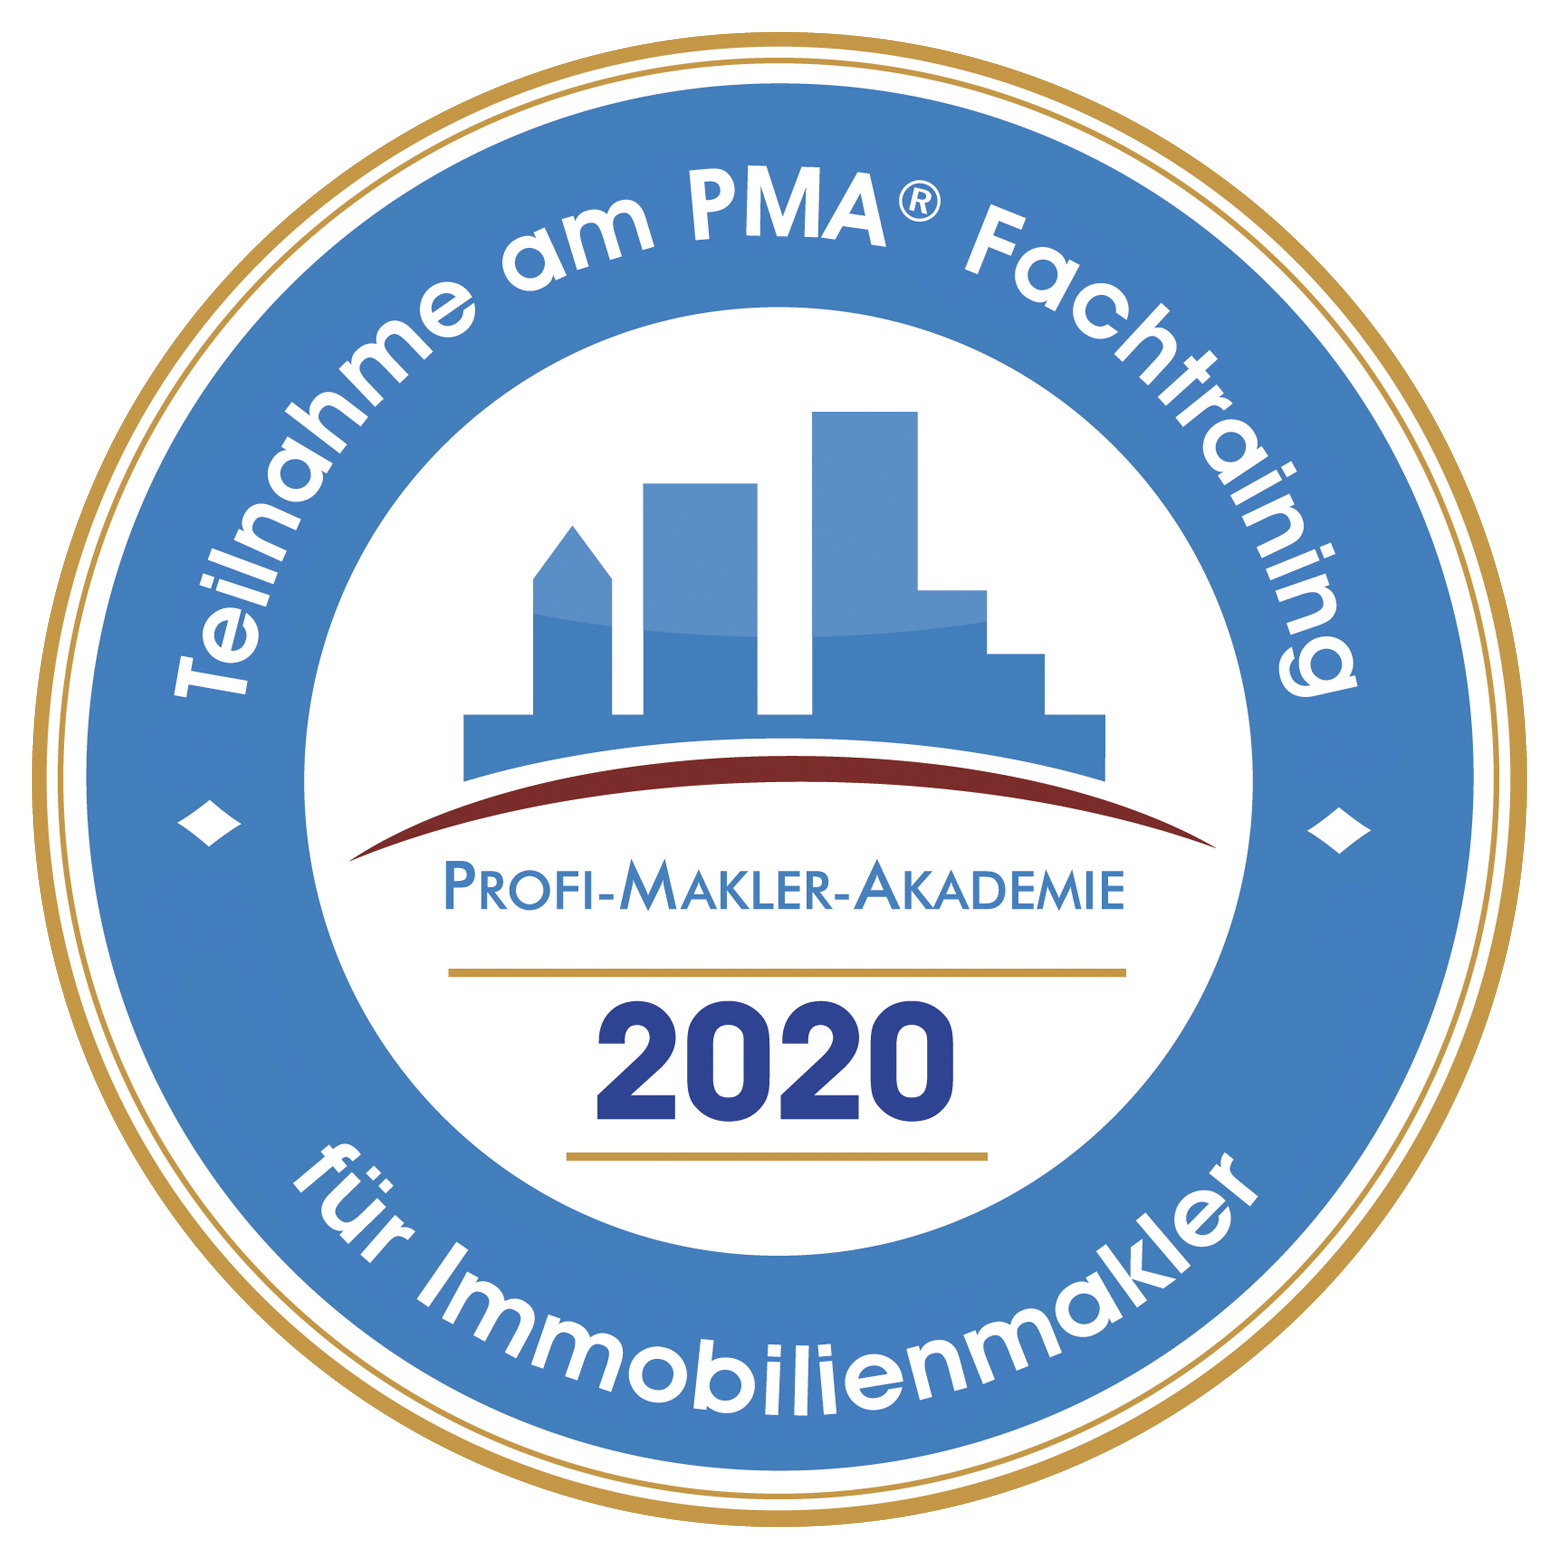 Emblem PMA Fachtraining 2020